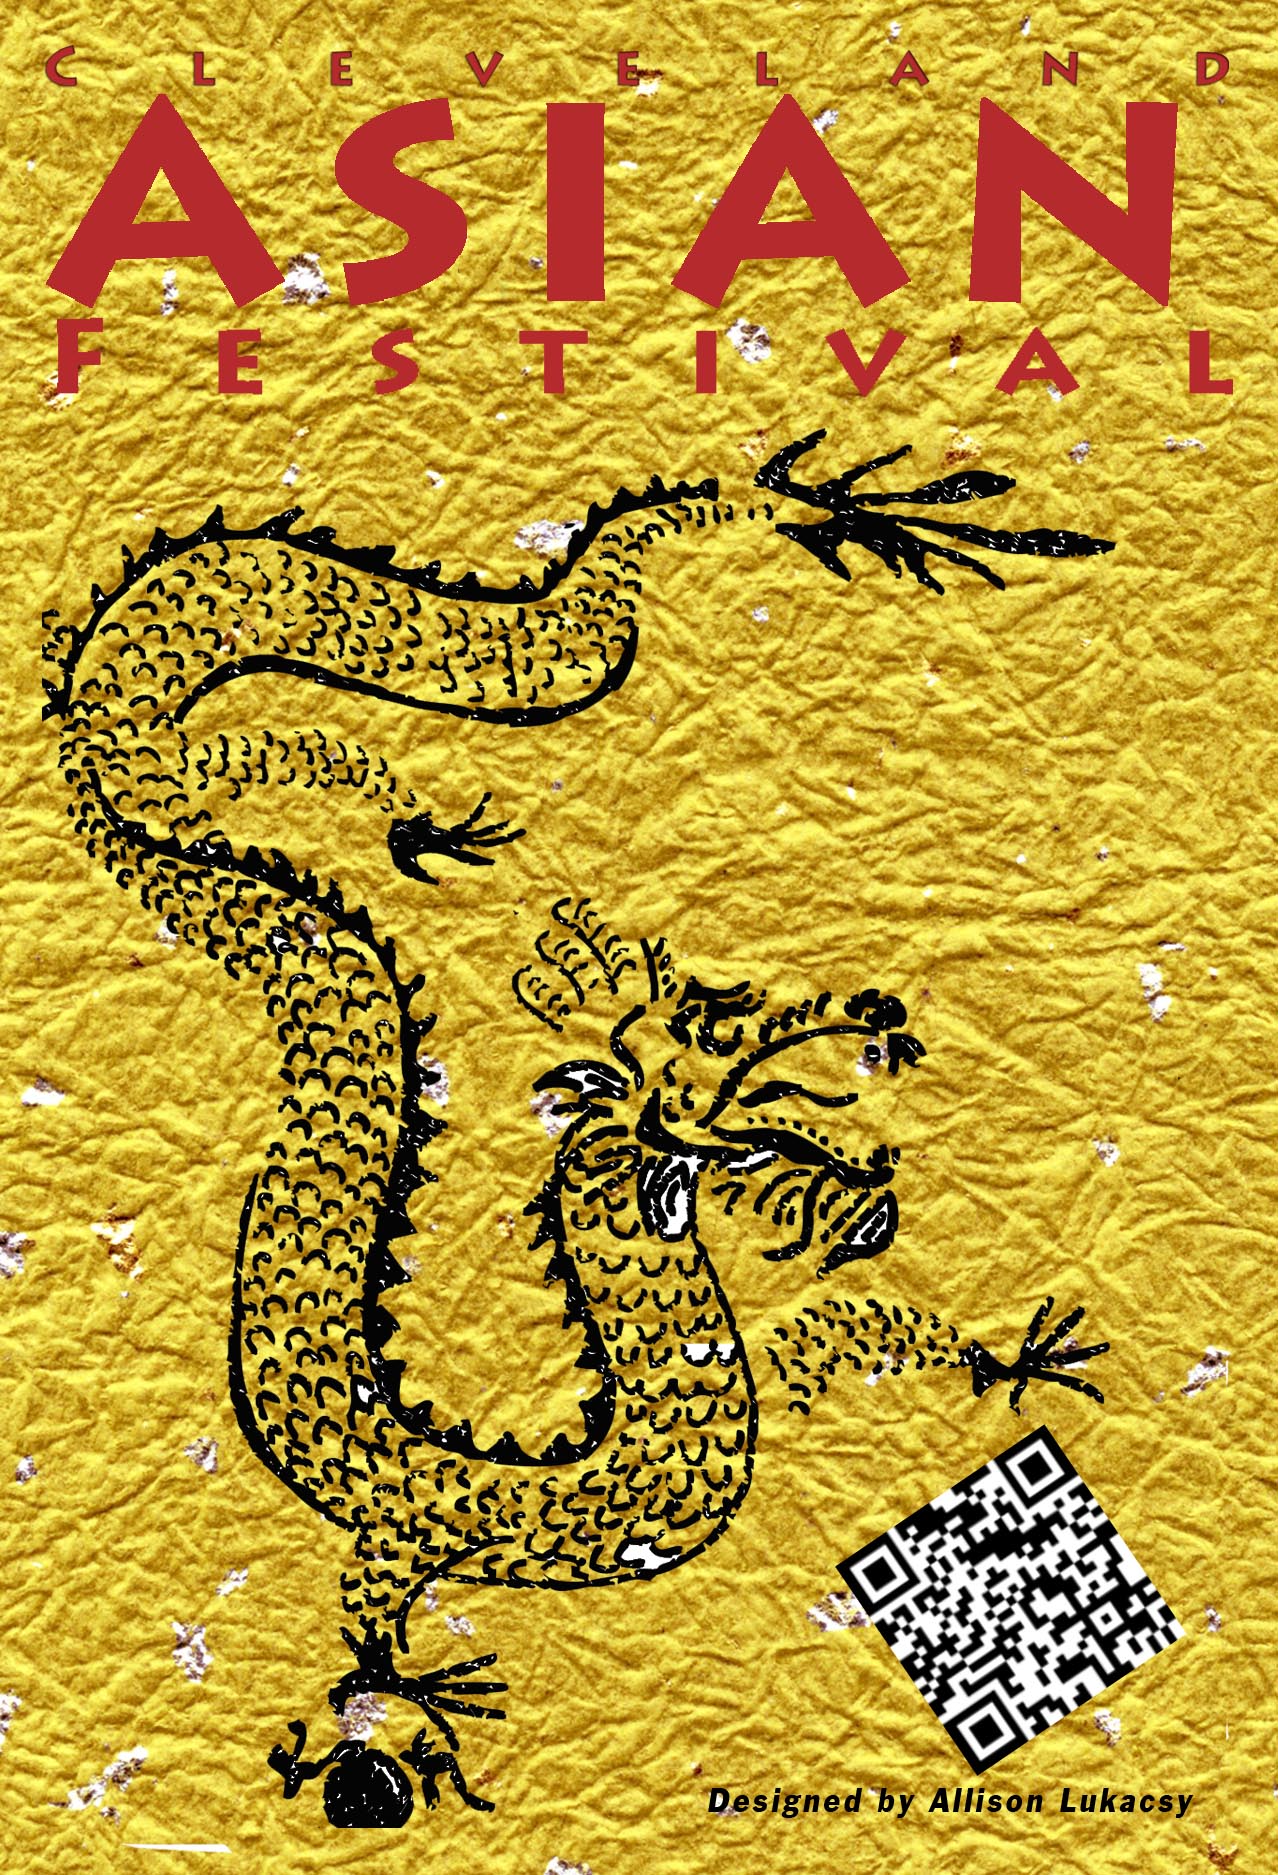 asia festival